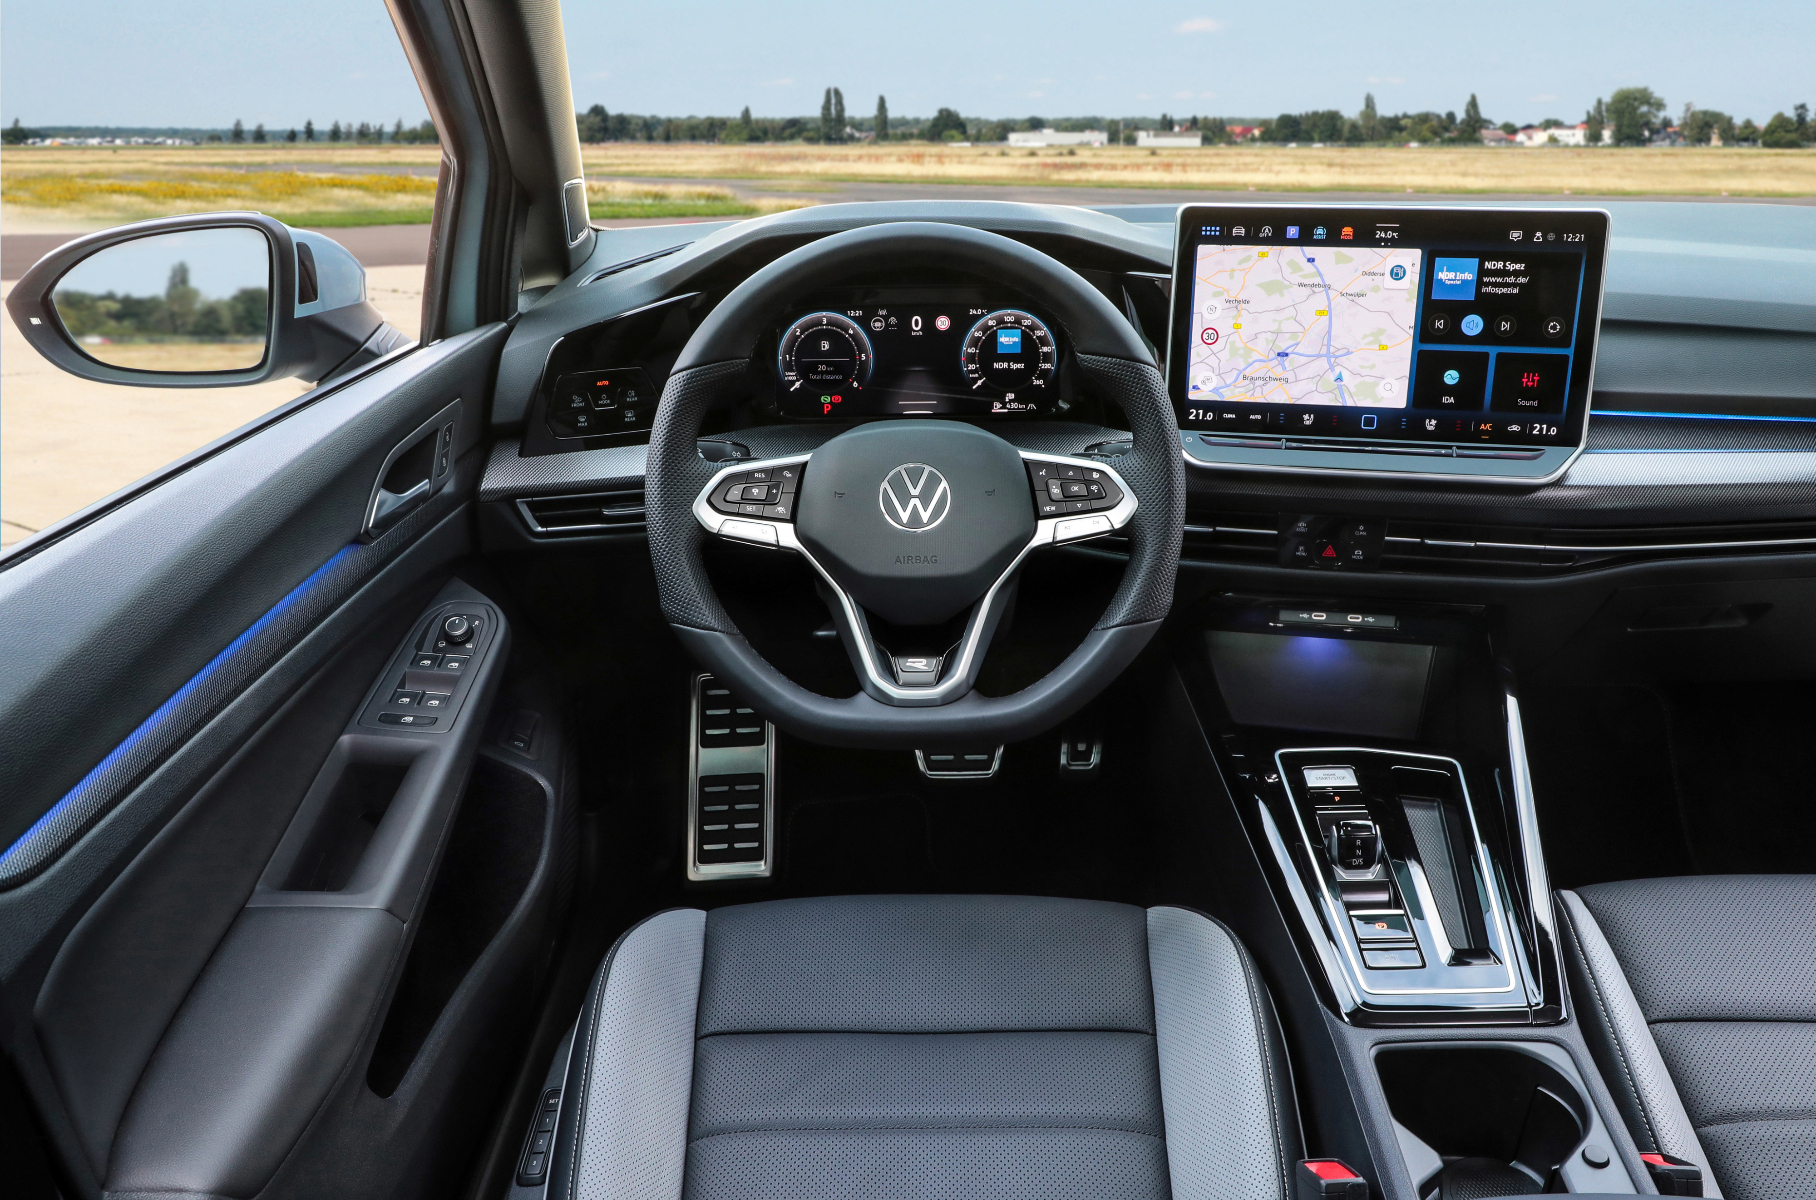 Volkswagen Golf обновился, стал «умнее» и мощнее9